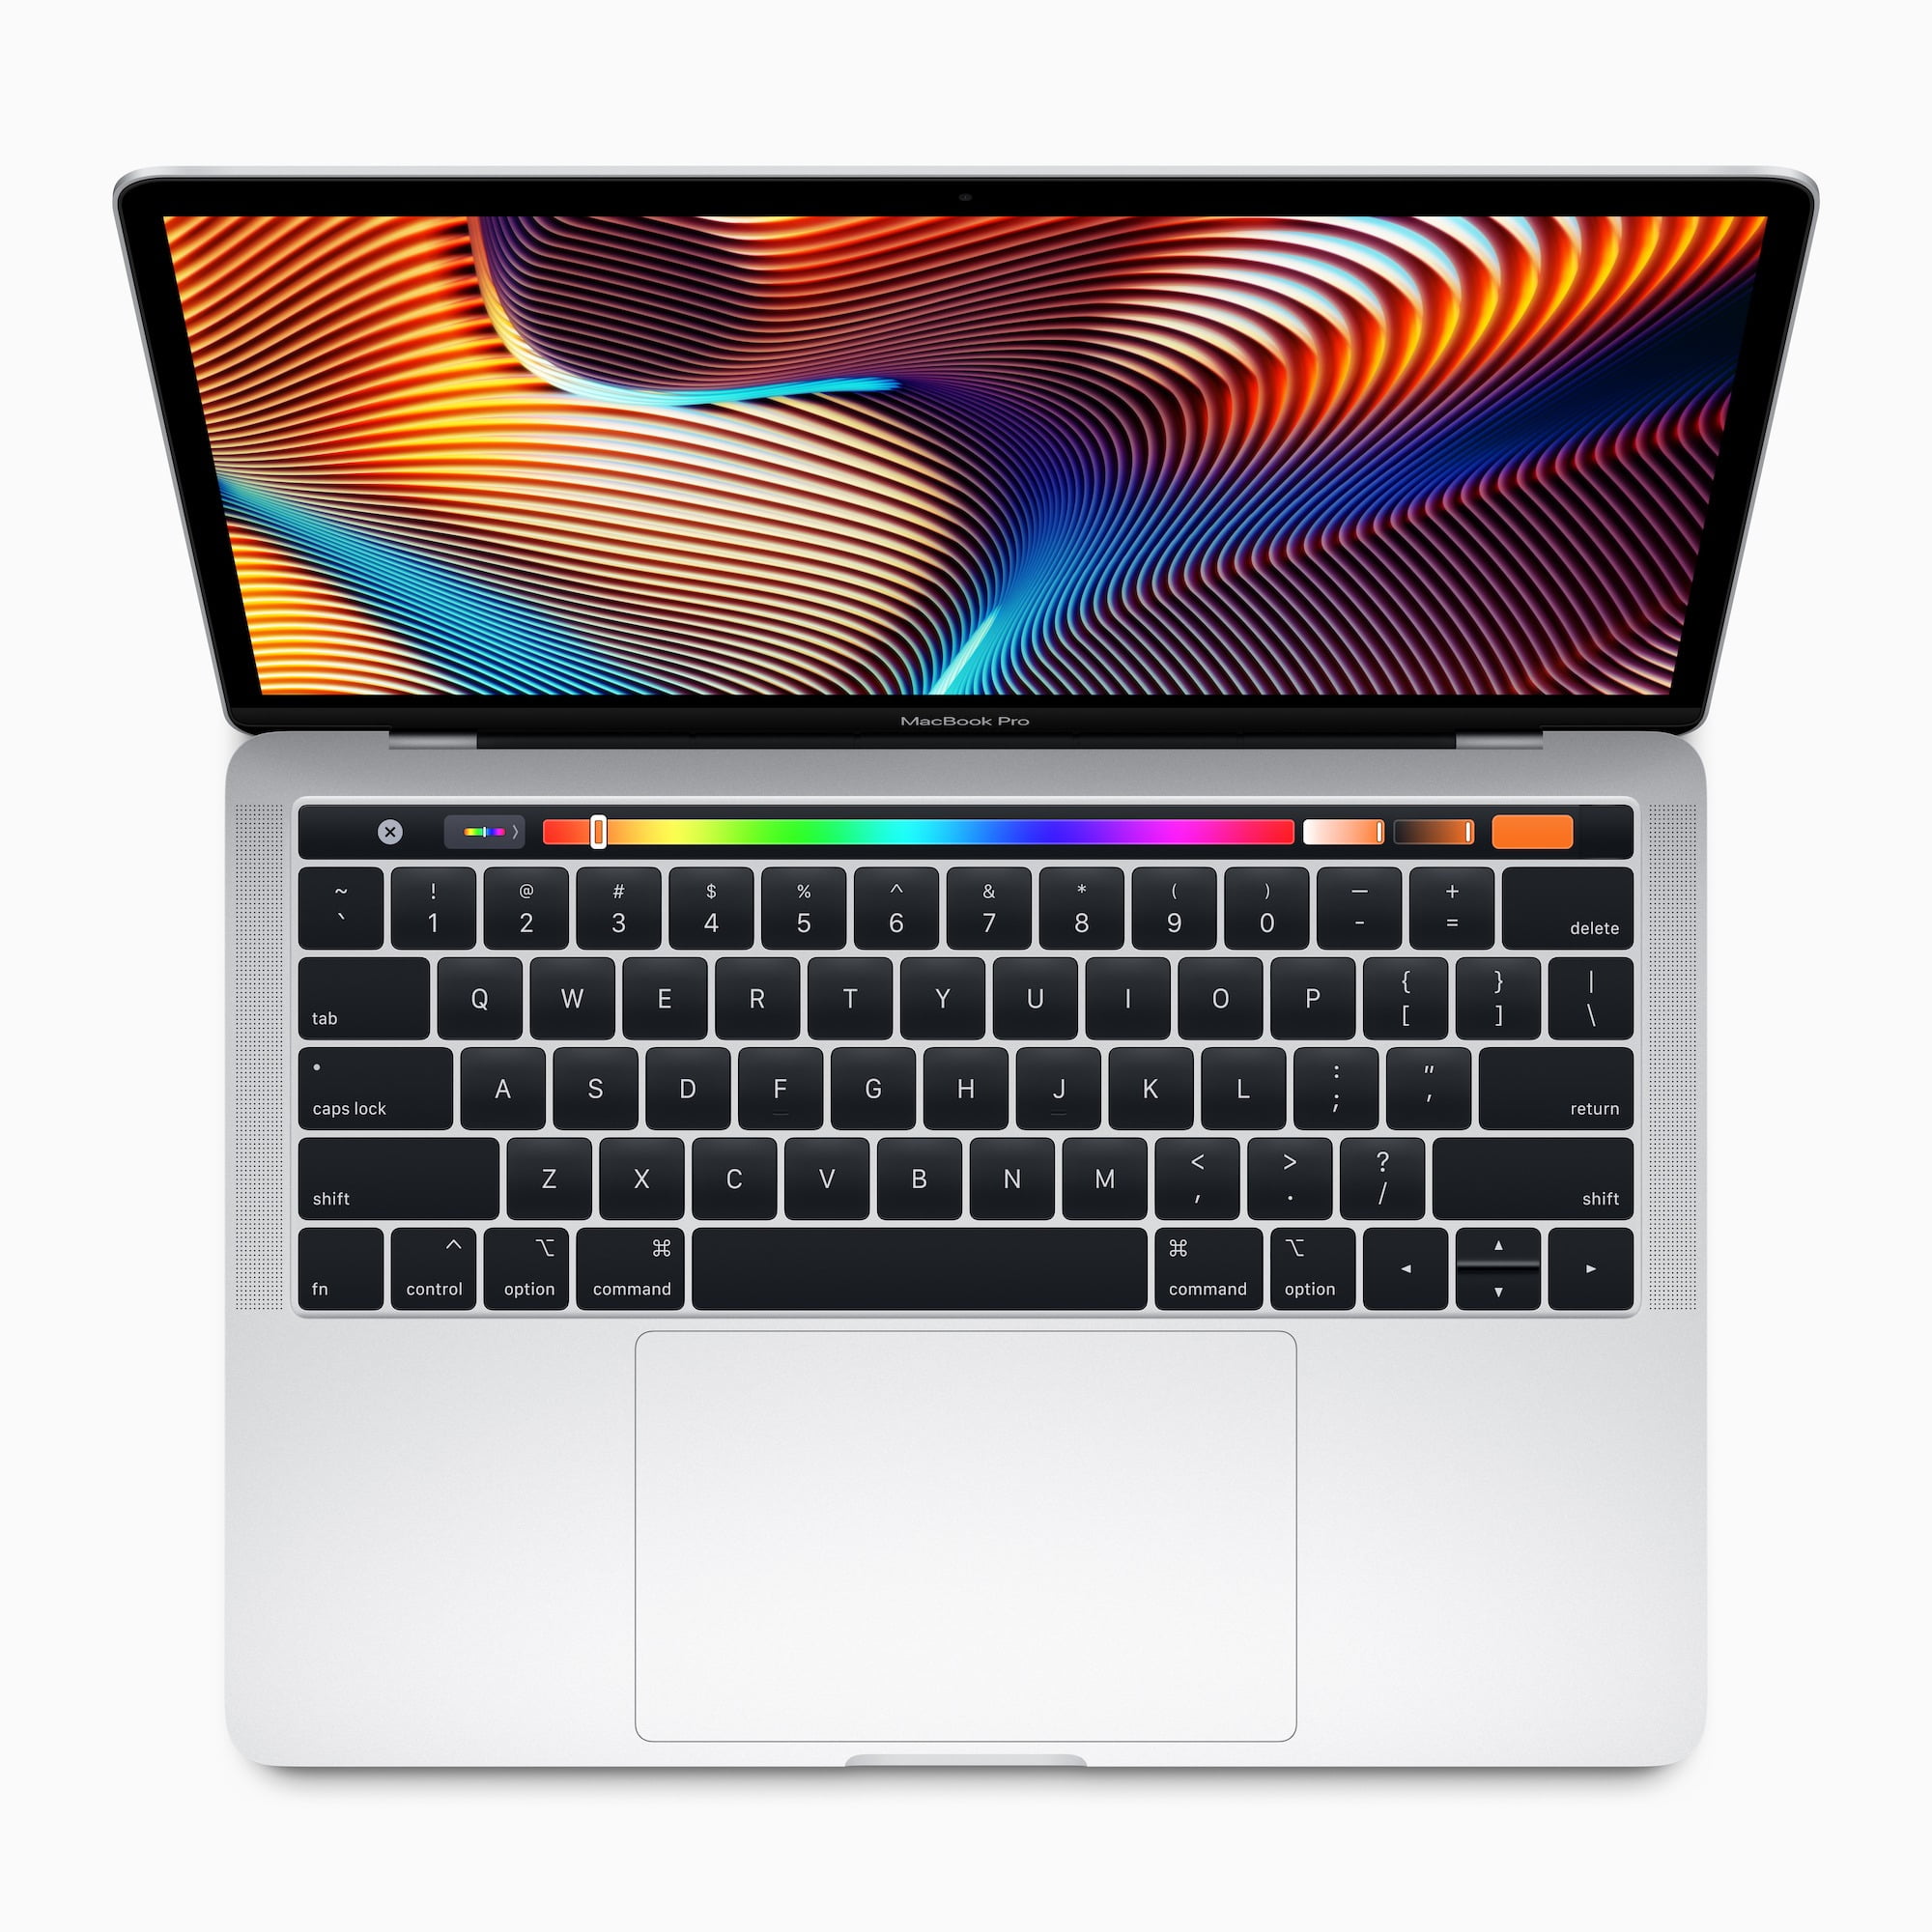 Apple MacBook Air and MacBook Pro update graphics screen 070919